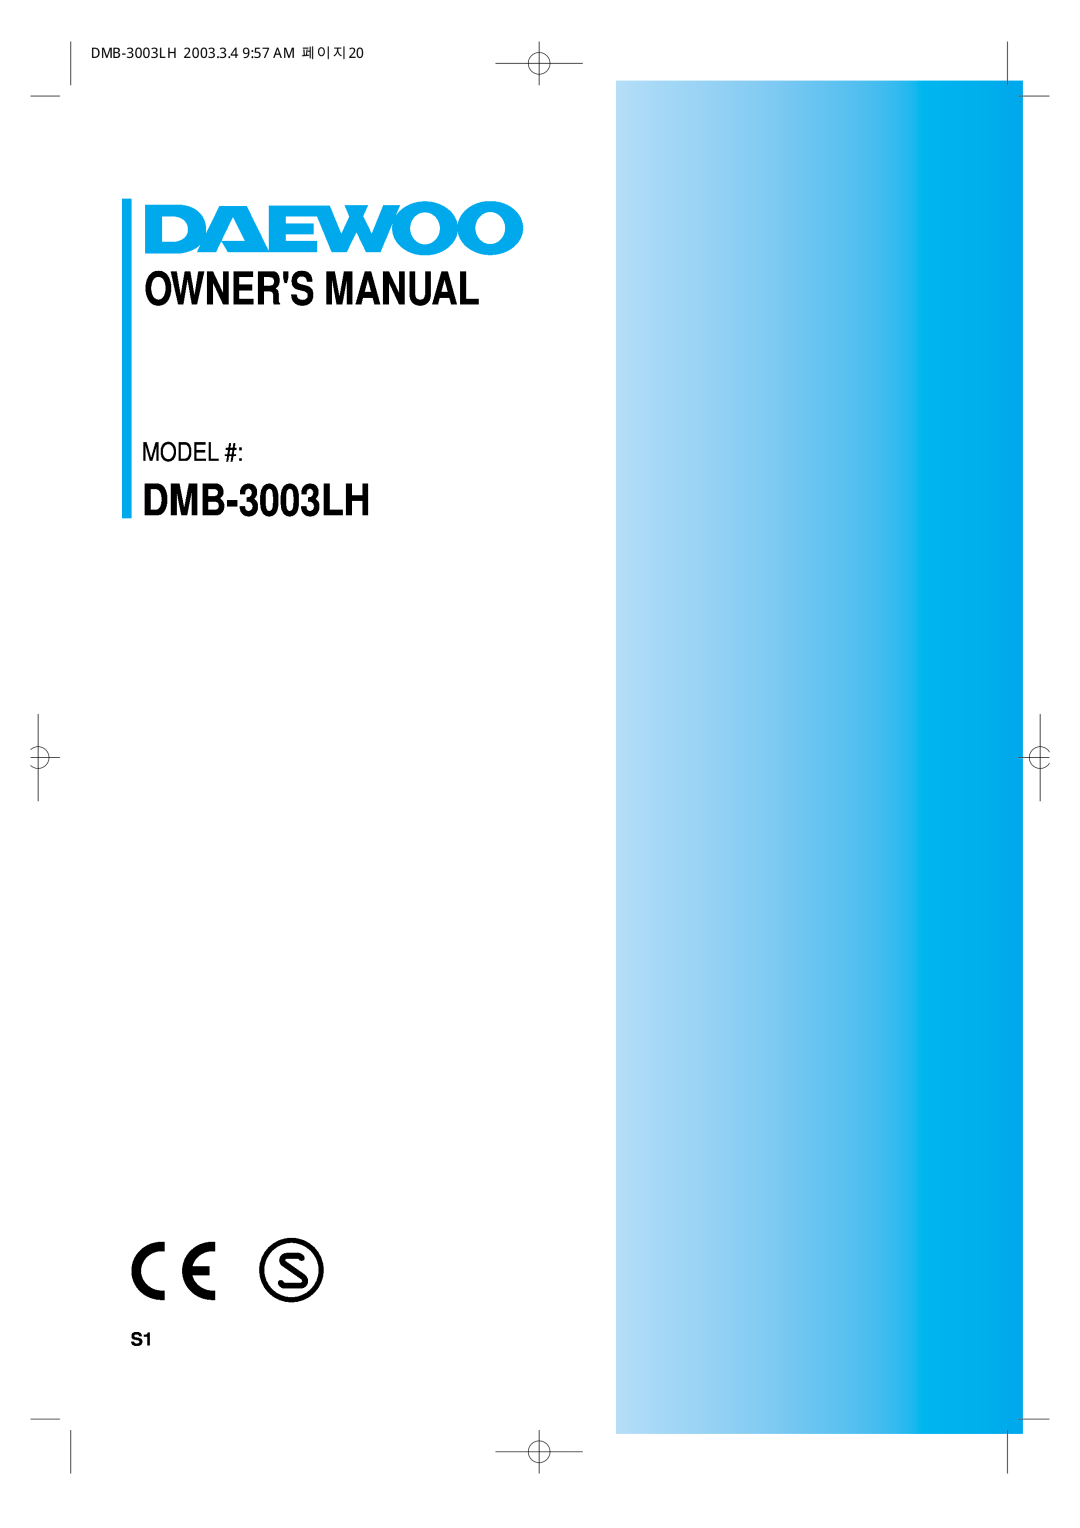 Daewoo owner manual Model #, DMB-3003LH 2003.3.4 957 AM 페이지20 